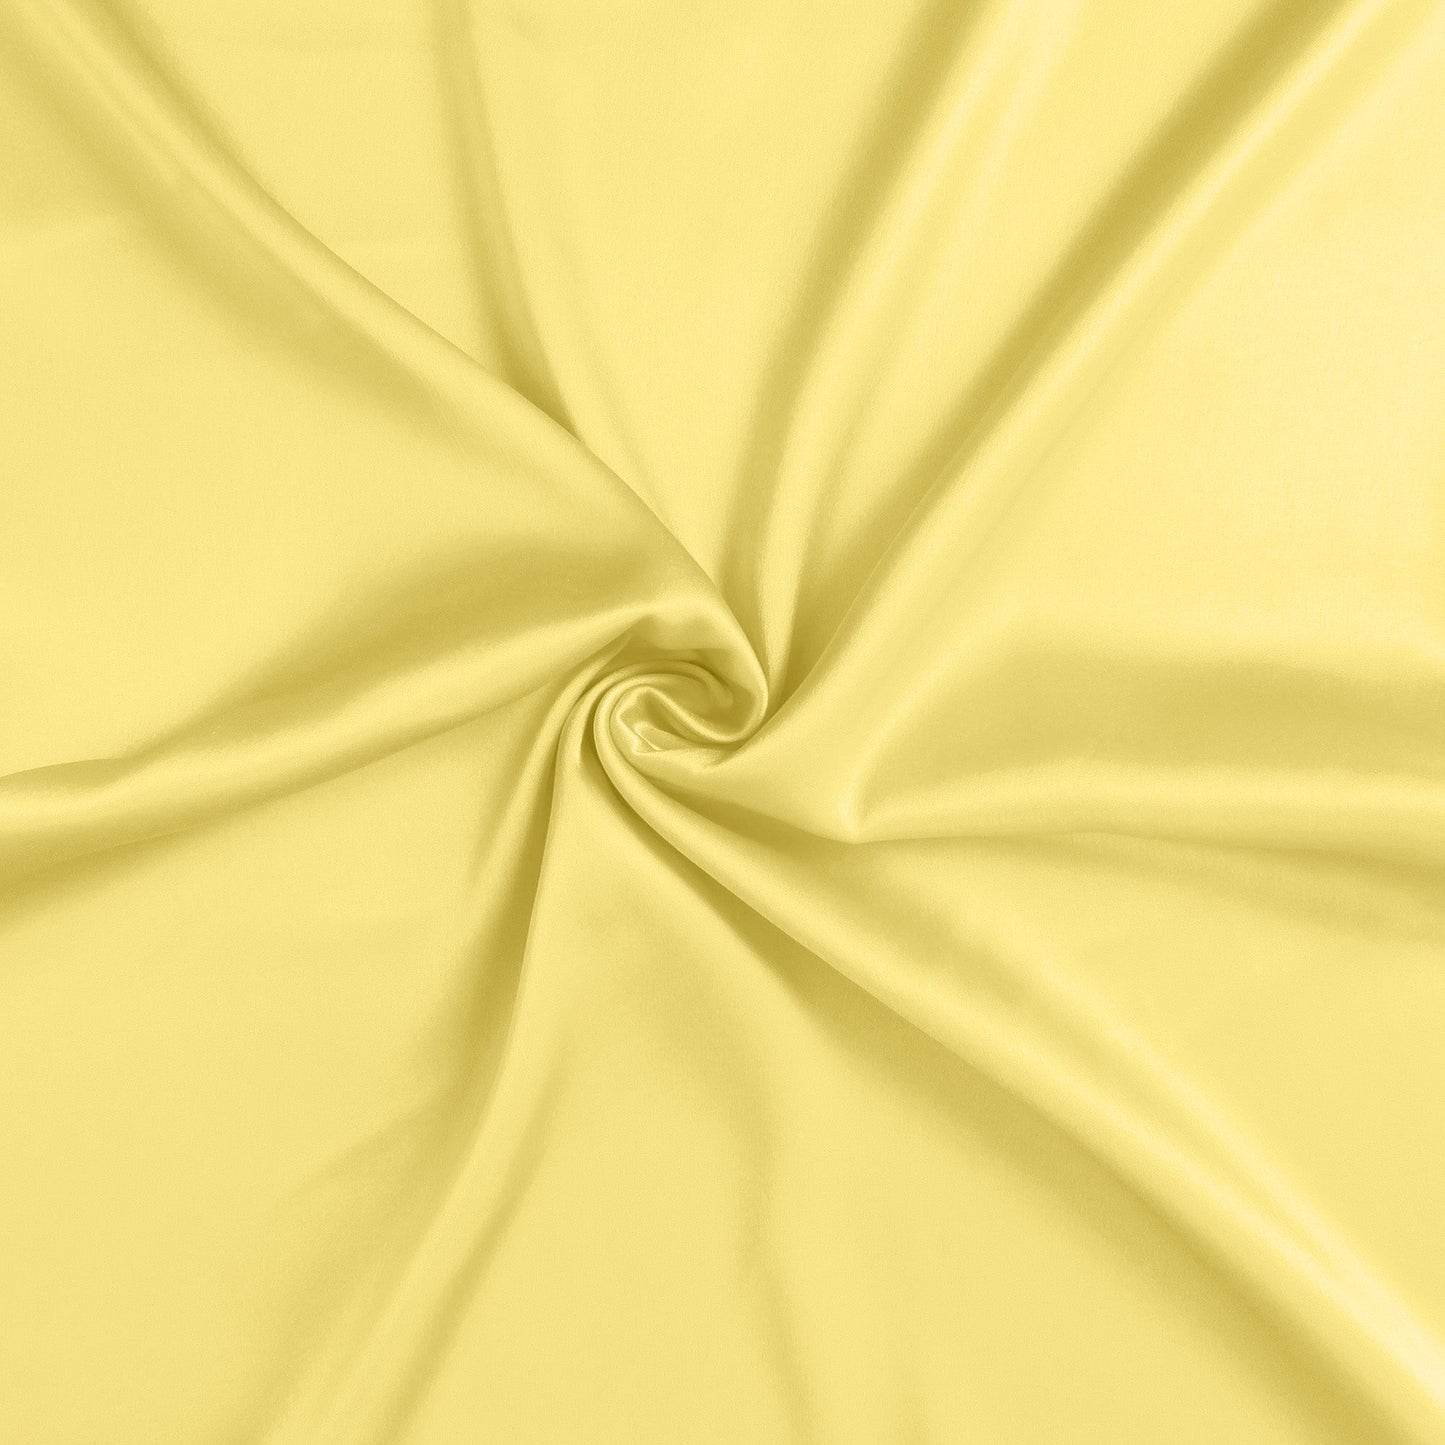 Luxury Soft Plain Satin Silk Pillowcases in Set of 2 - Flax Yellow